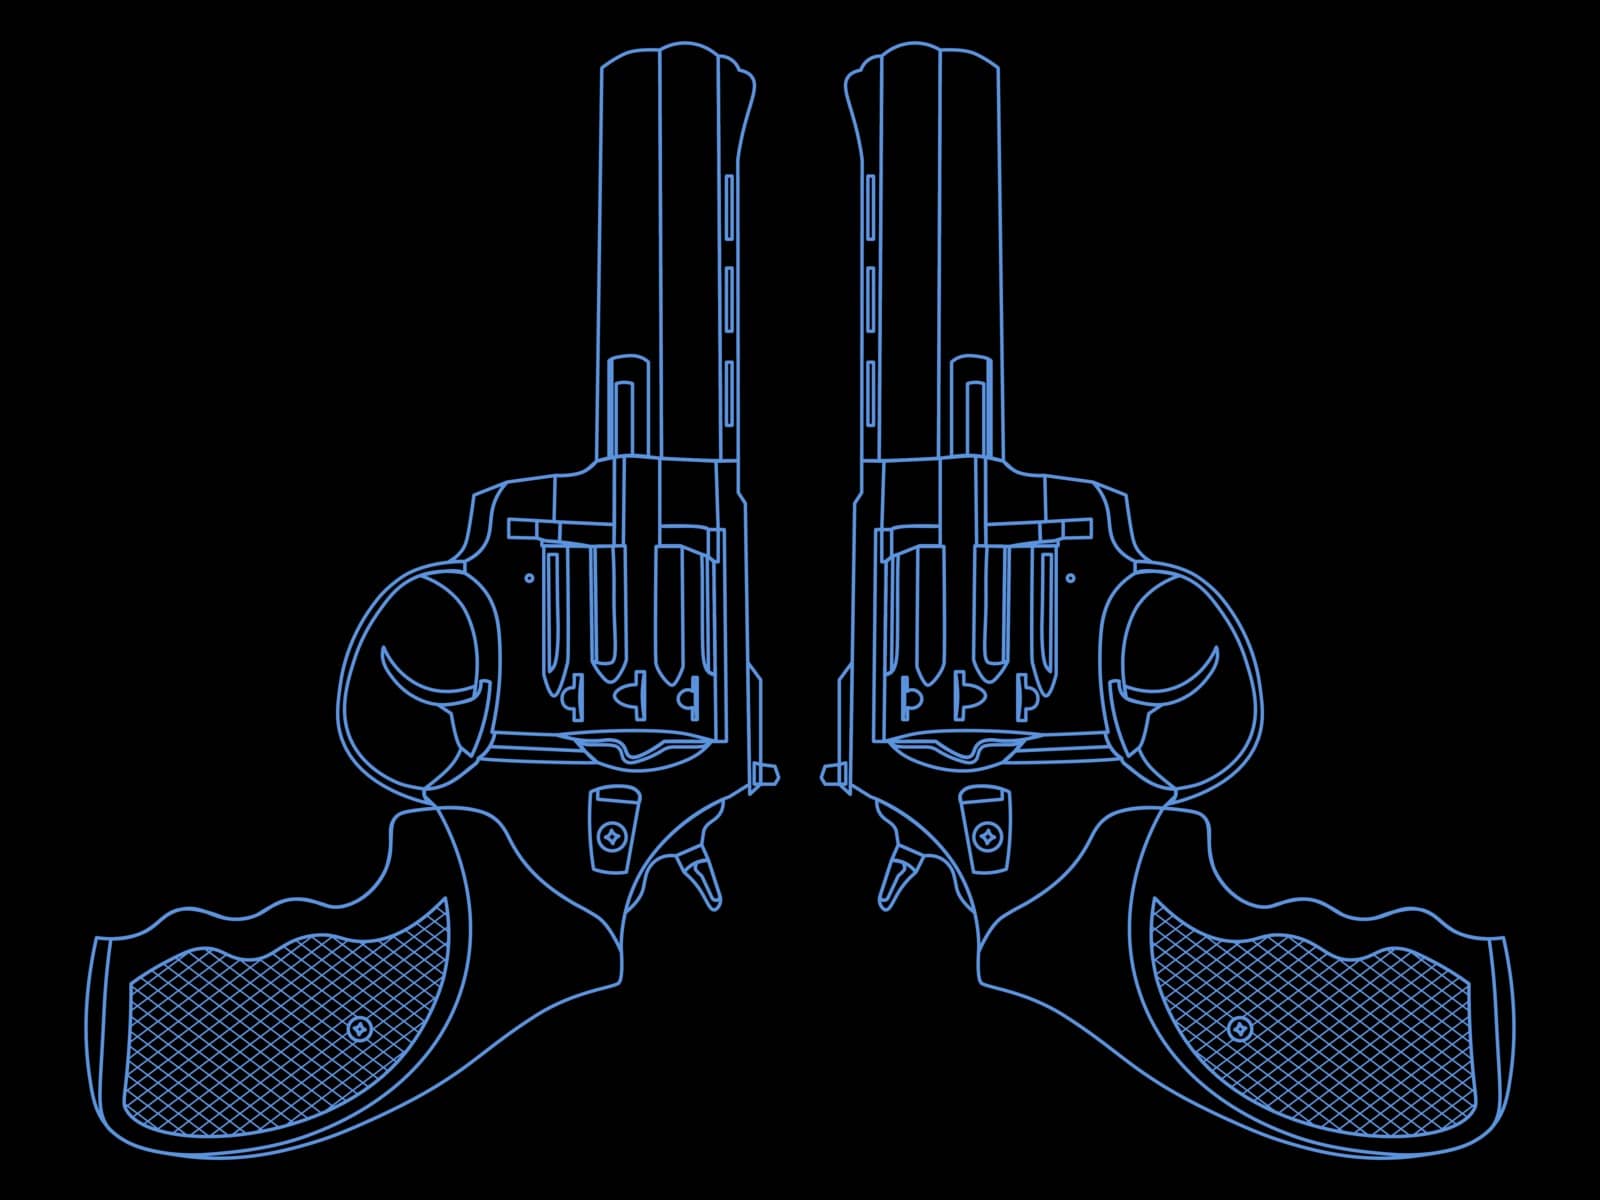 Two symmetric blue contour revolvers on black background by paranoido